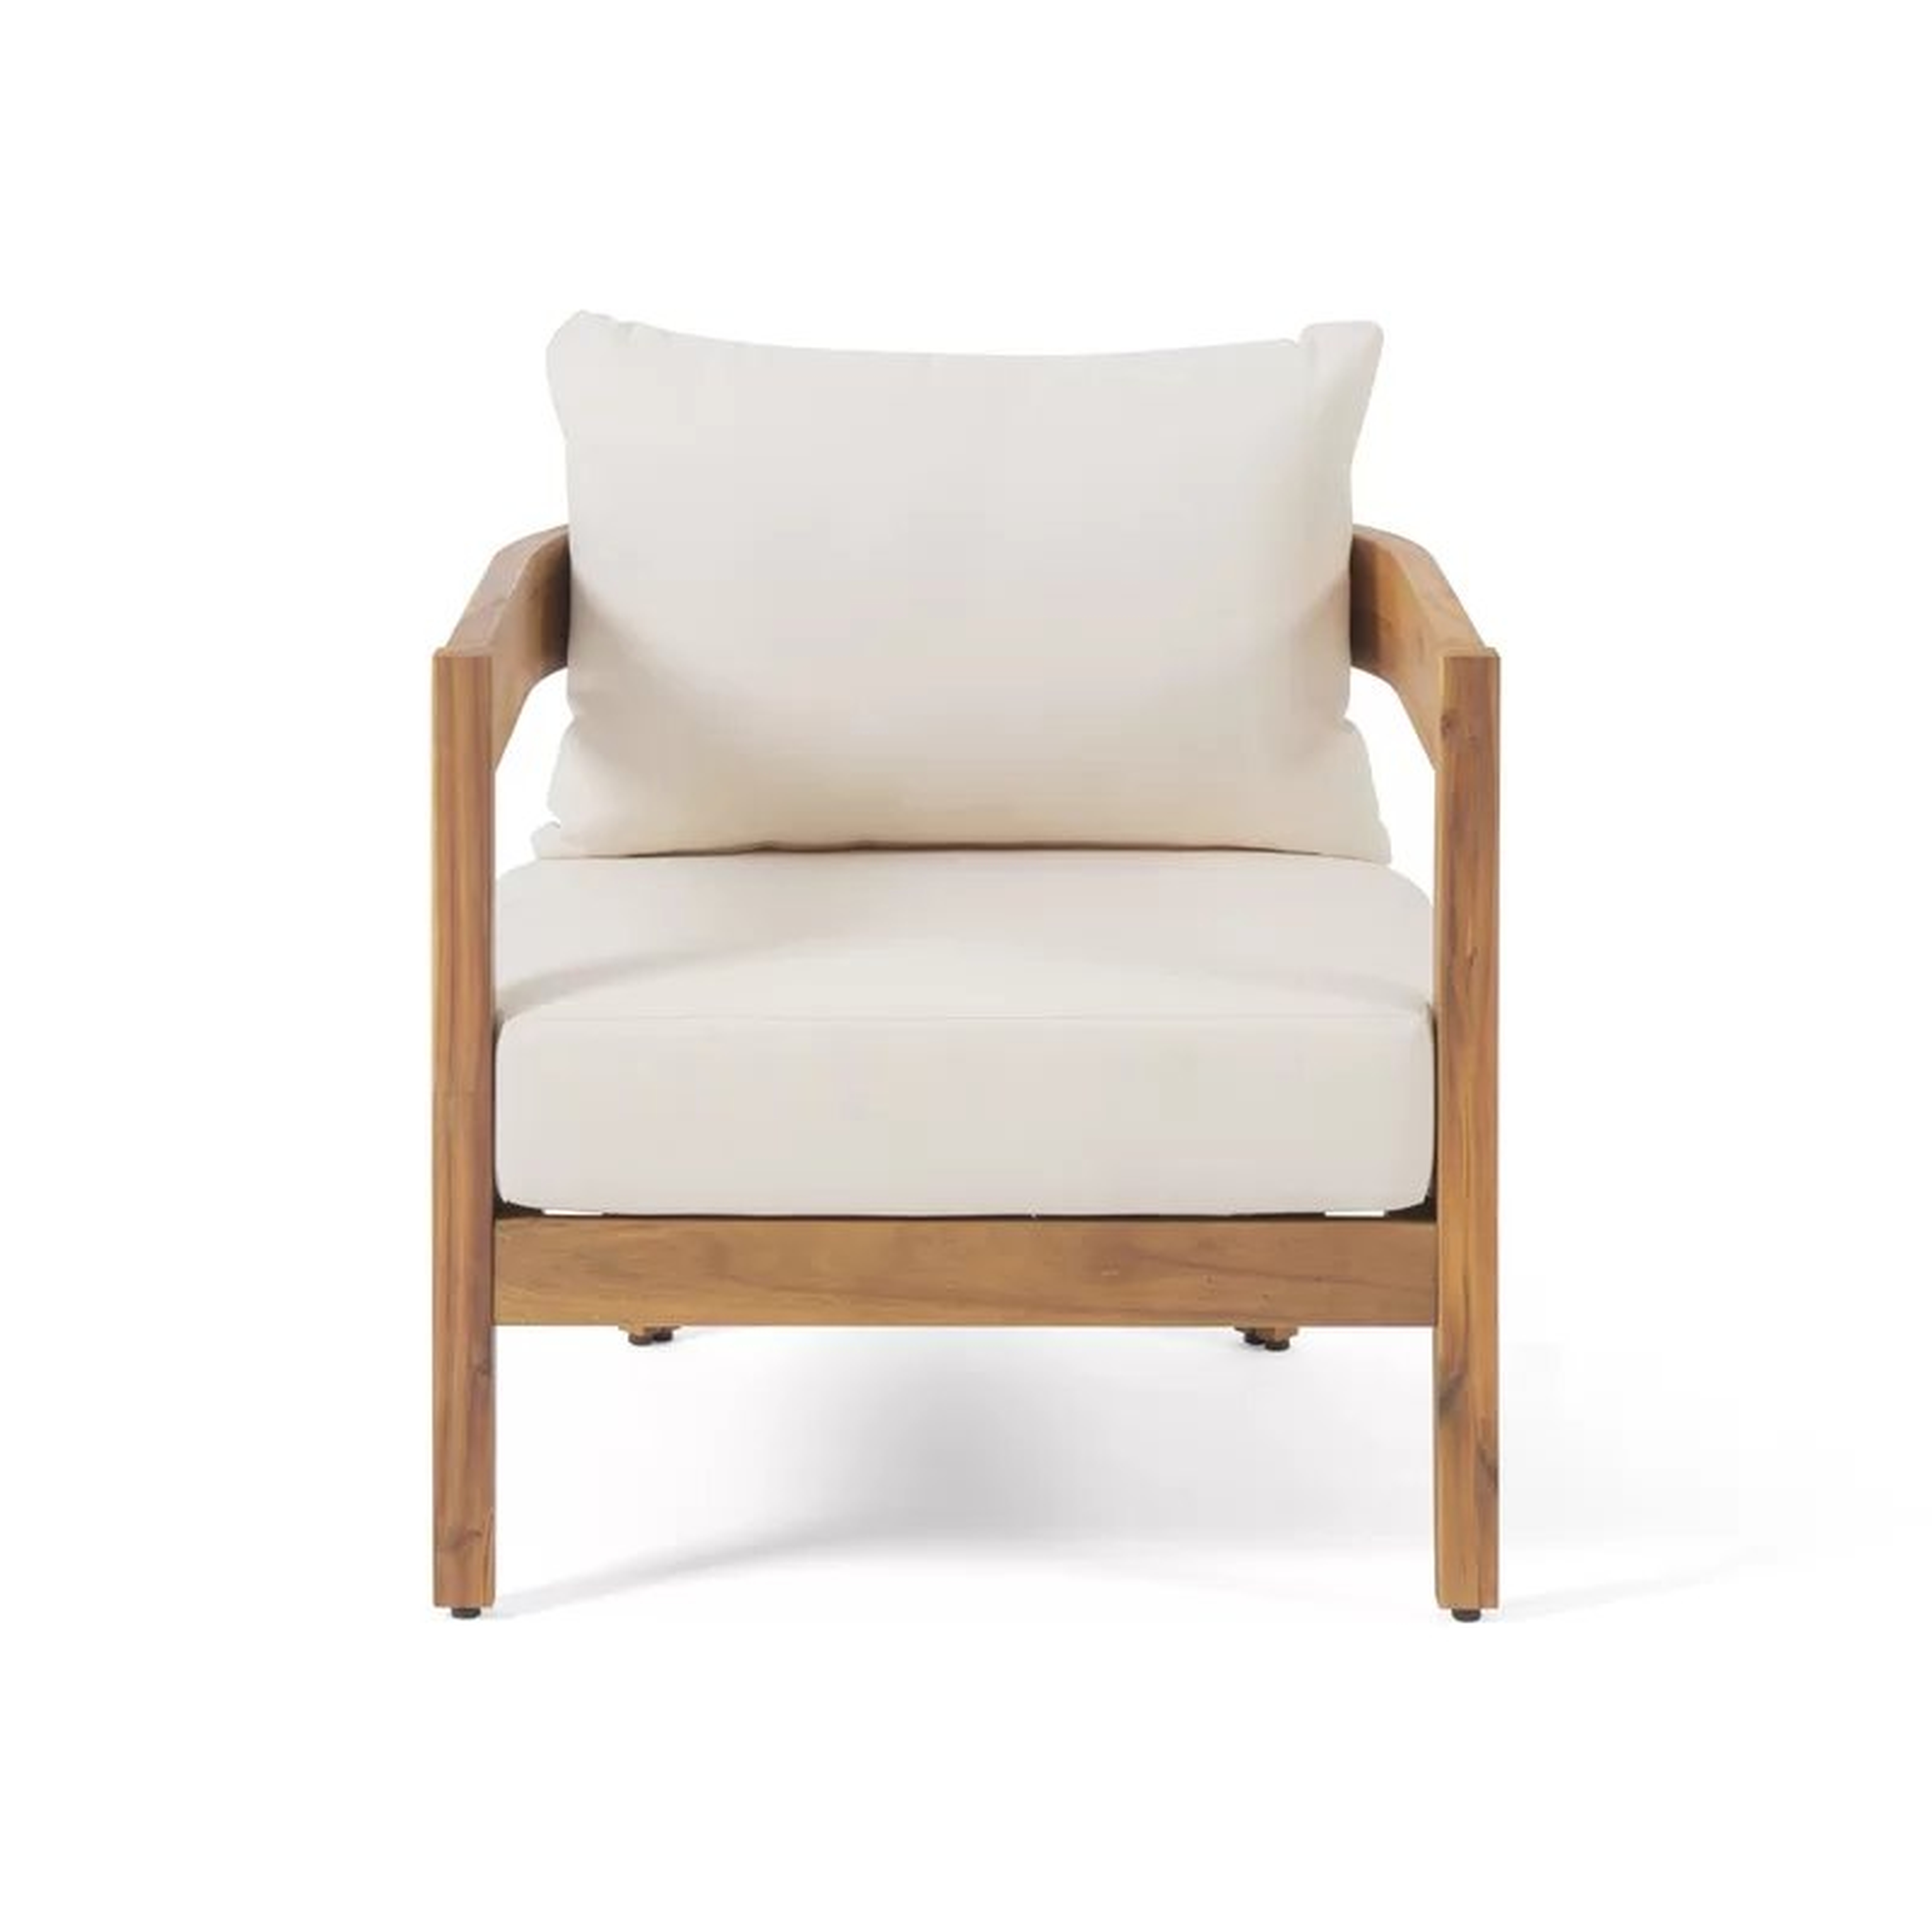 Genna Patio Chair with Cushions - Wayfair